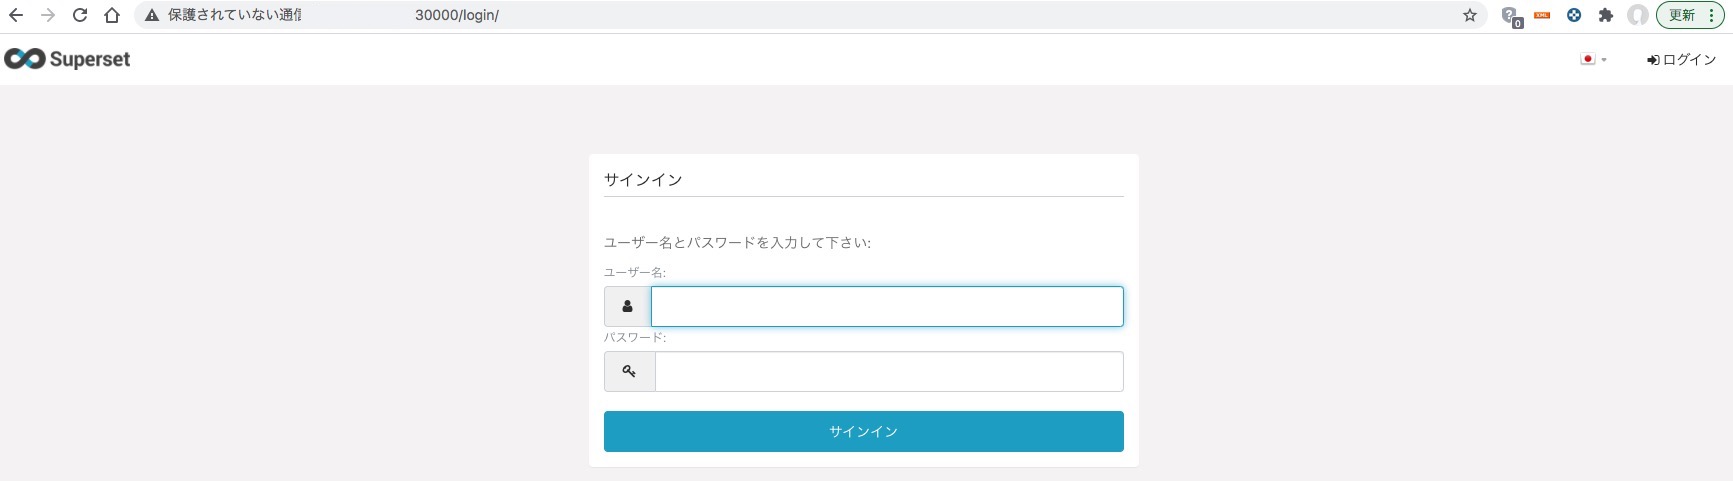 Apache Supersetへのログイン方法と日本語化方法